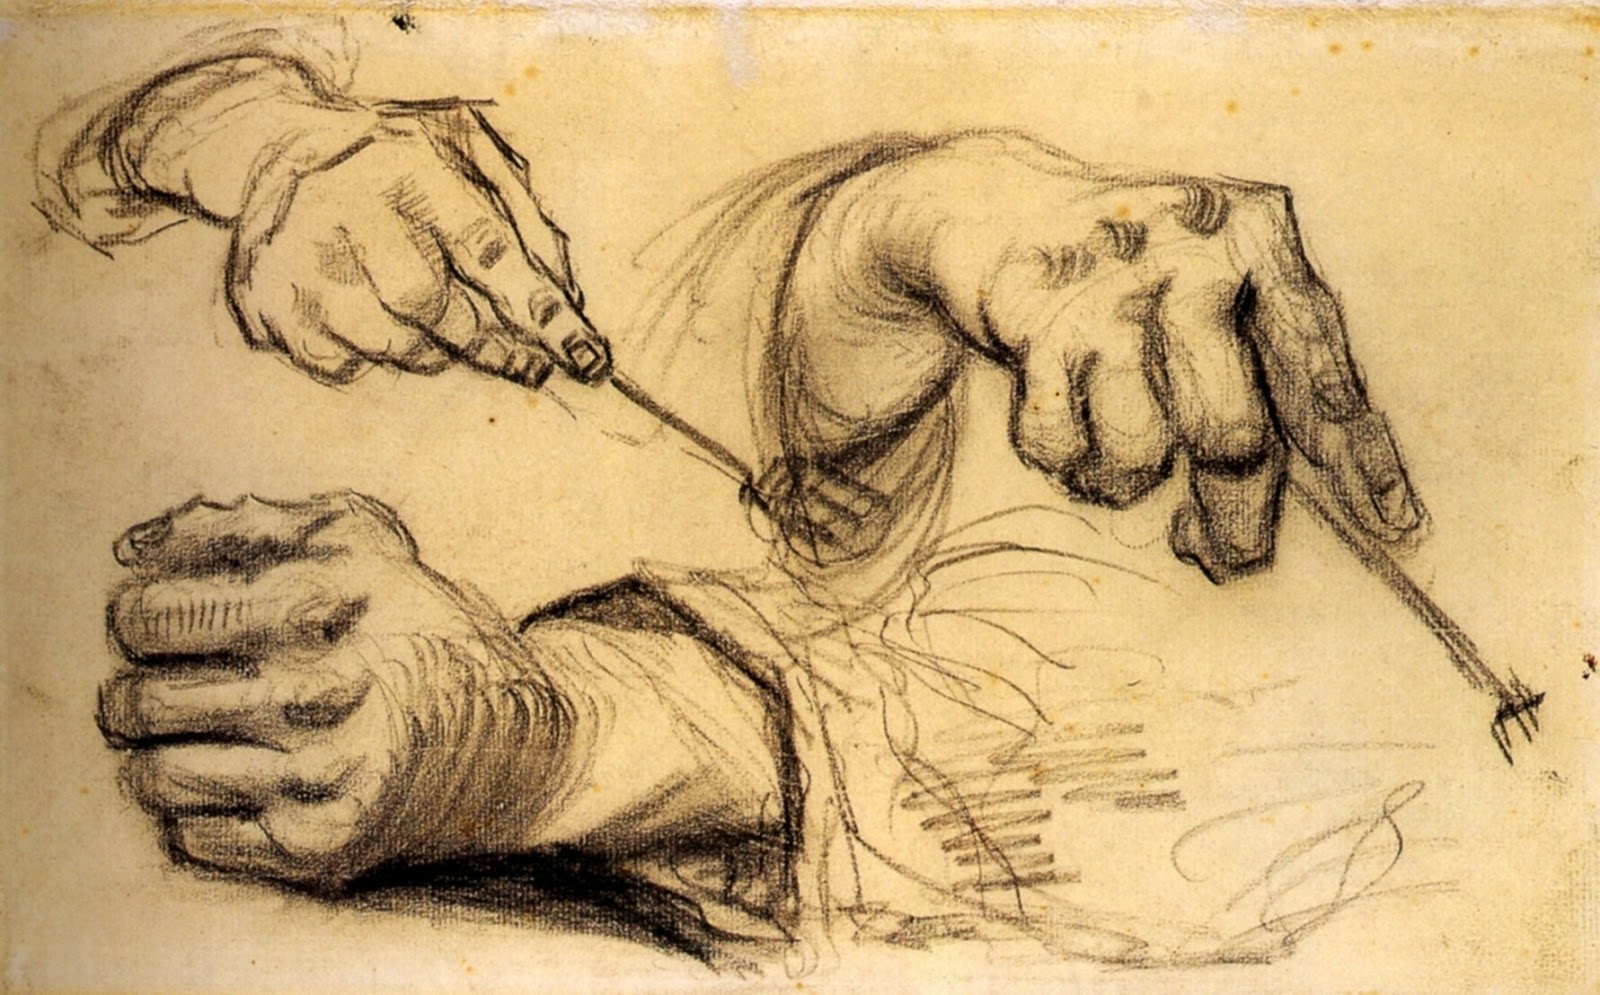 Vincent+Van+Gogh-1853-1890 (815).jpg